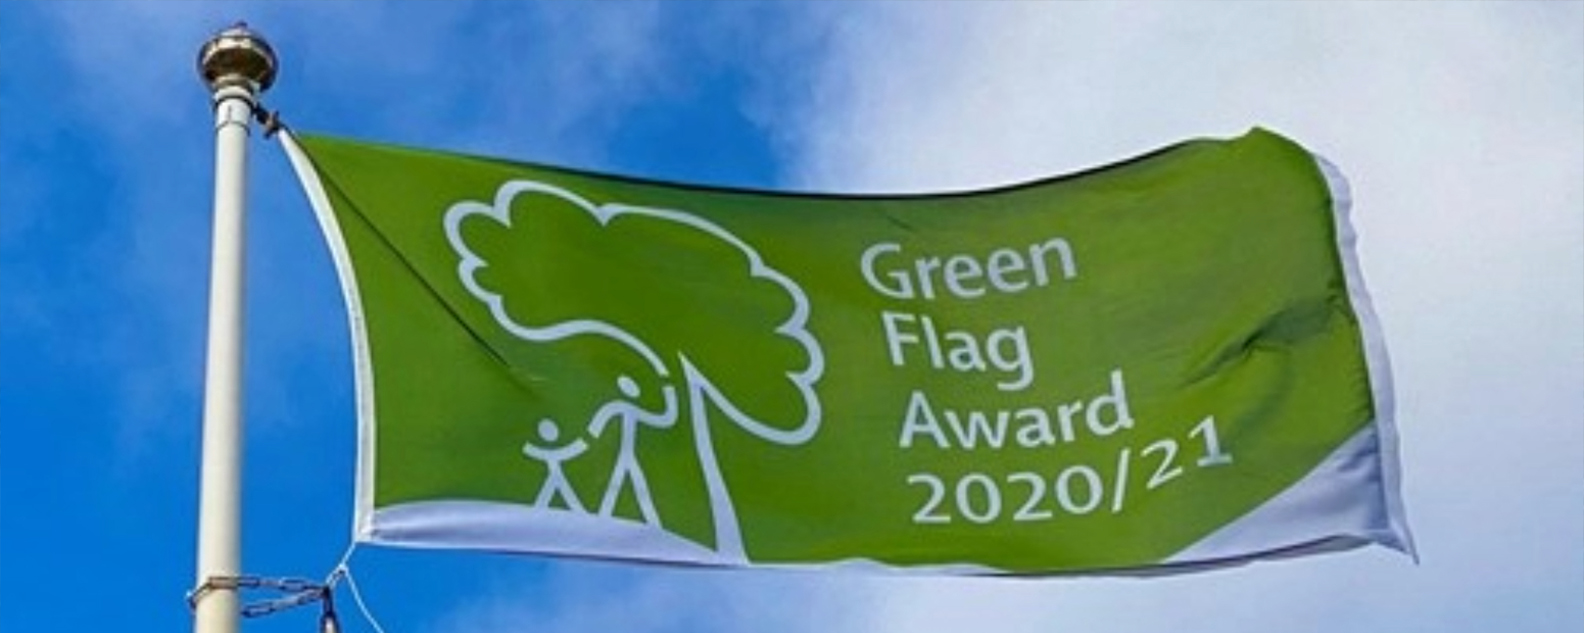 Green flag award.